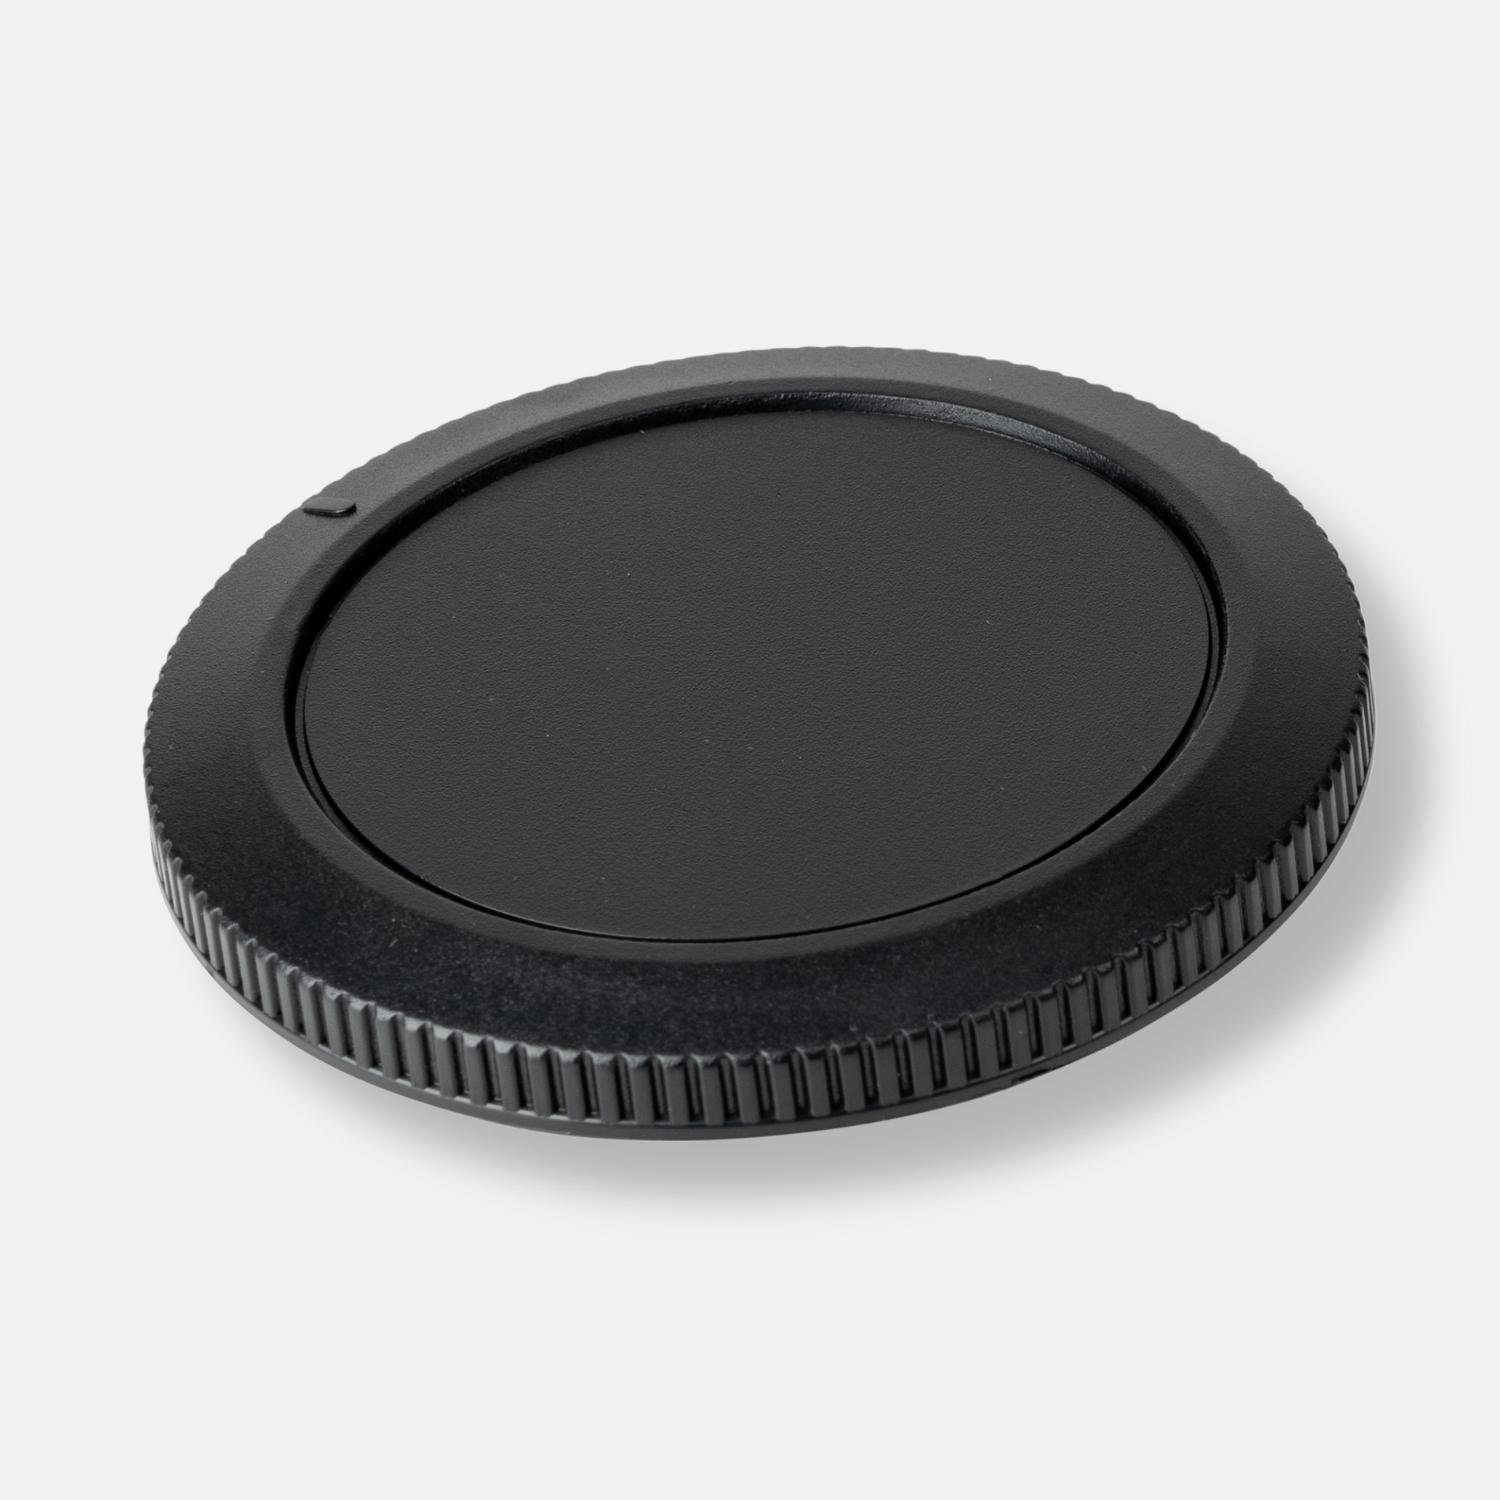 Lens-Aid Gehäusedeckel für Canon RF-Bajonett, Body Cap, DSLR, Systemkamera